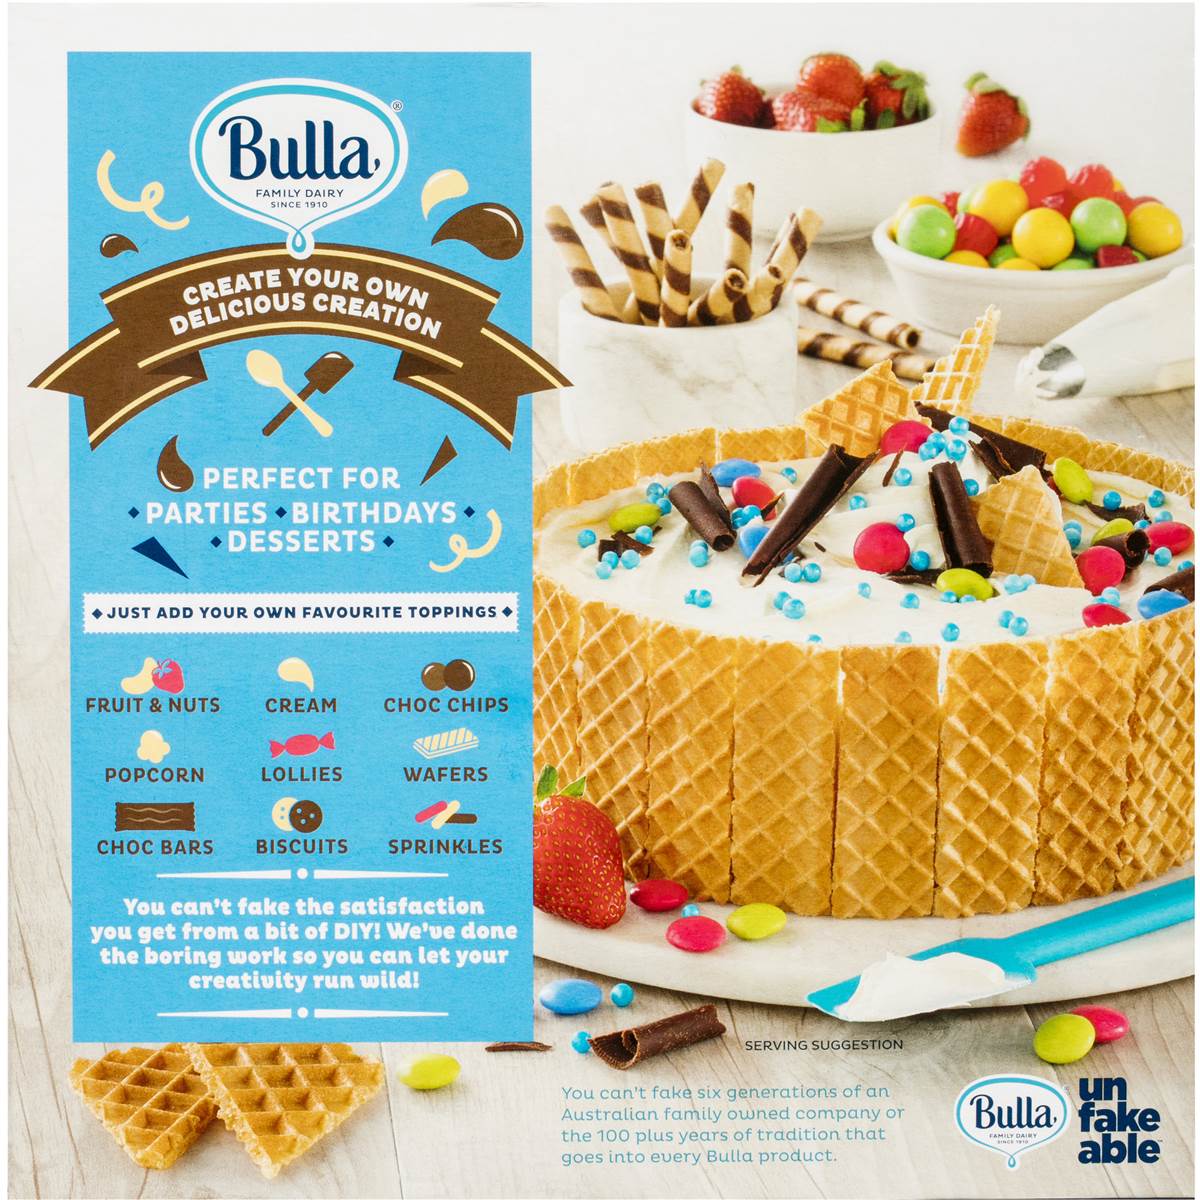 Bulla Ready To Decorate Cake Base 1.5L